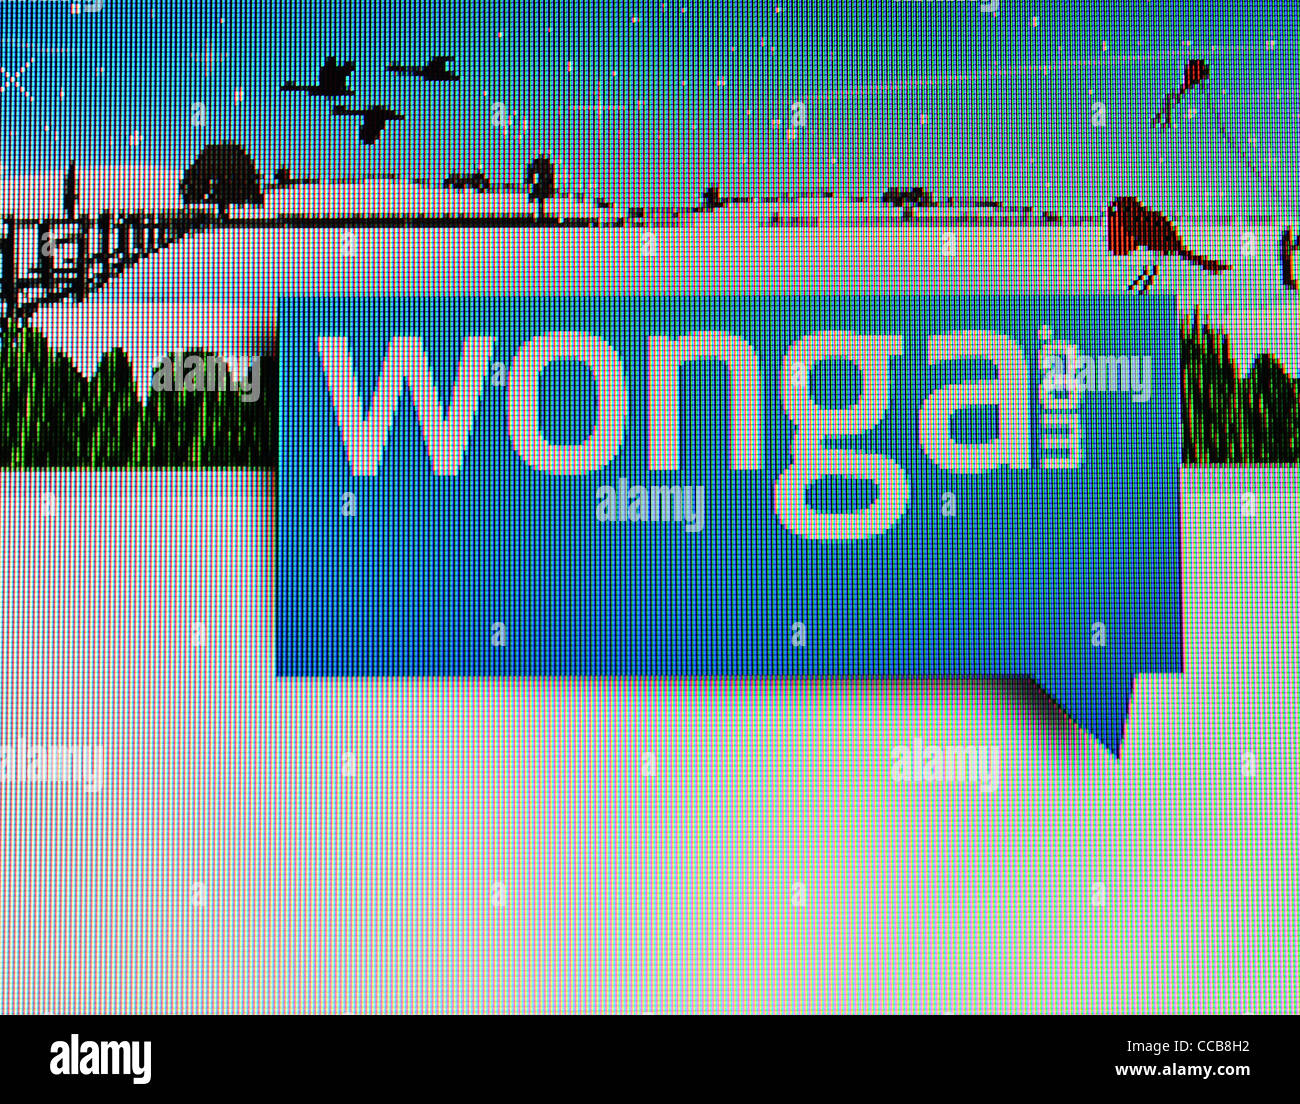 Wonga.com sofort Bargeld Darlehen-Website Stockfoto